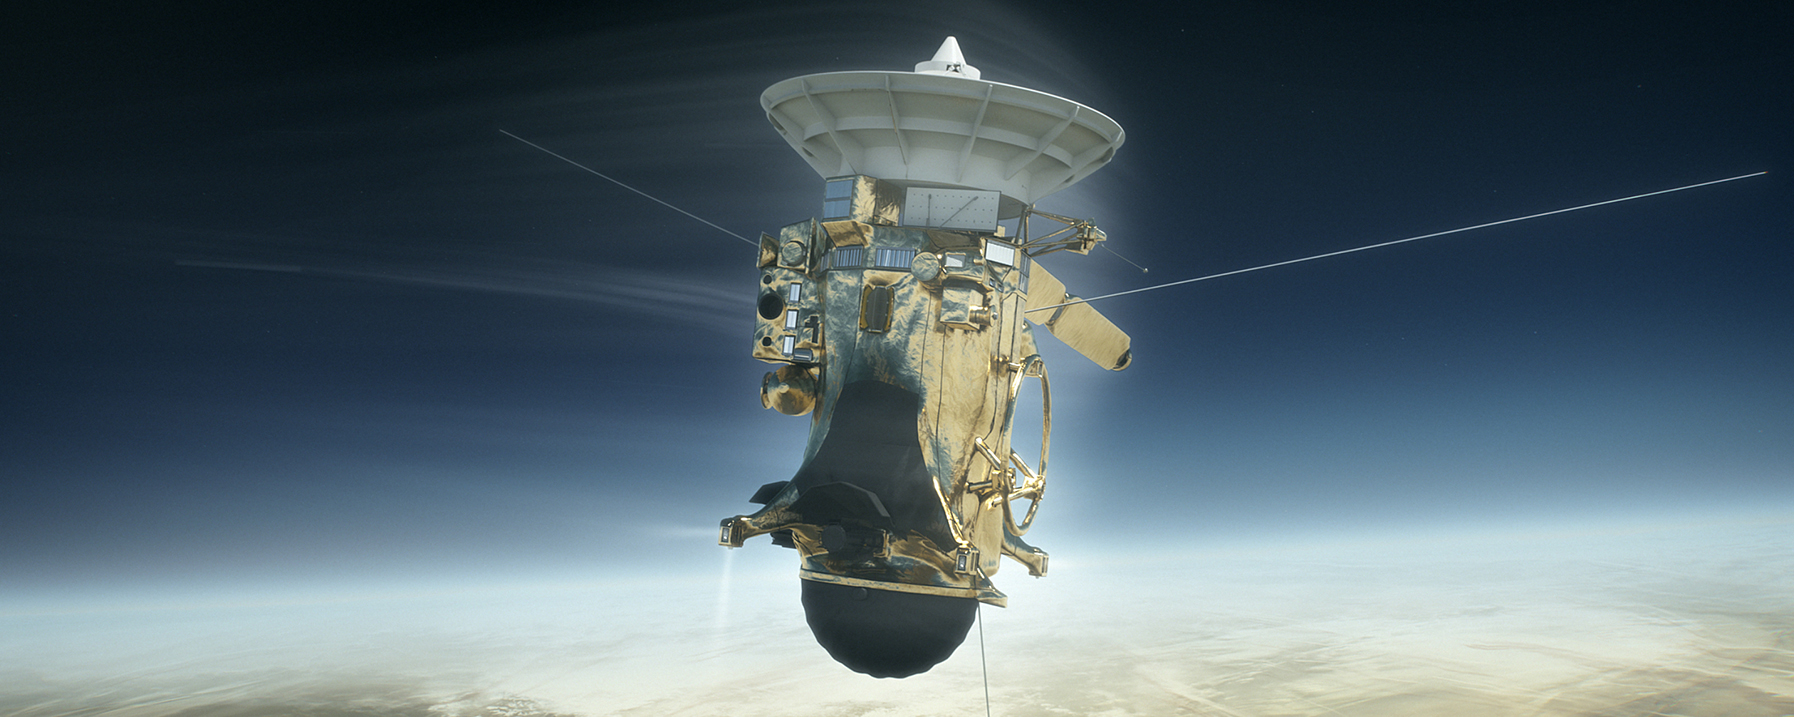 Artist Concept of Cassin Spacecraft Entering Saturn's Atmosphere